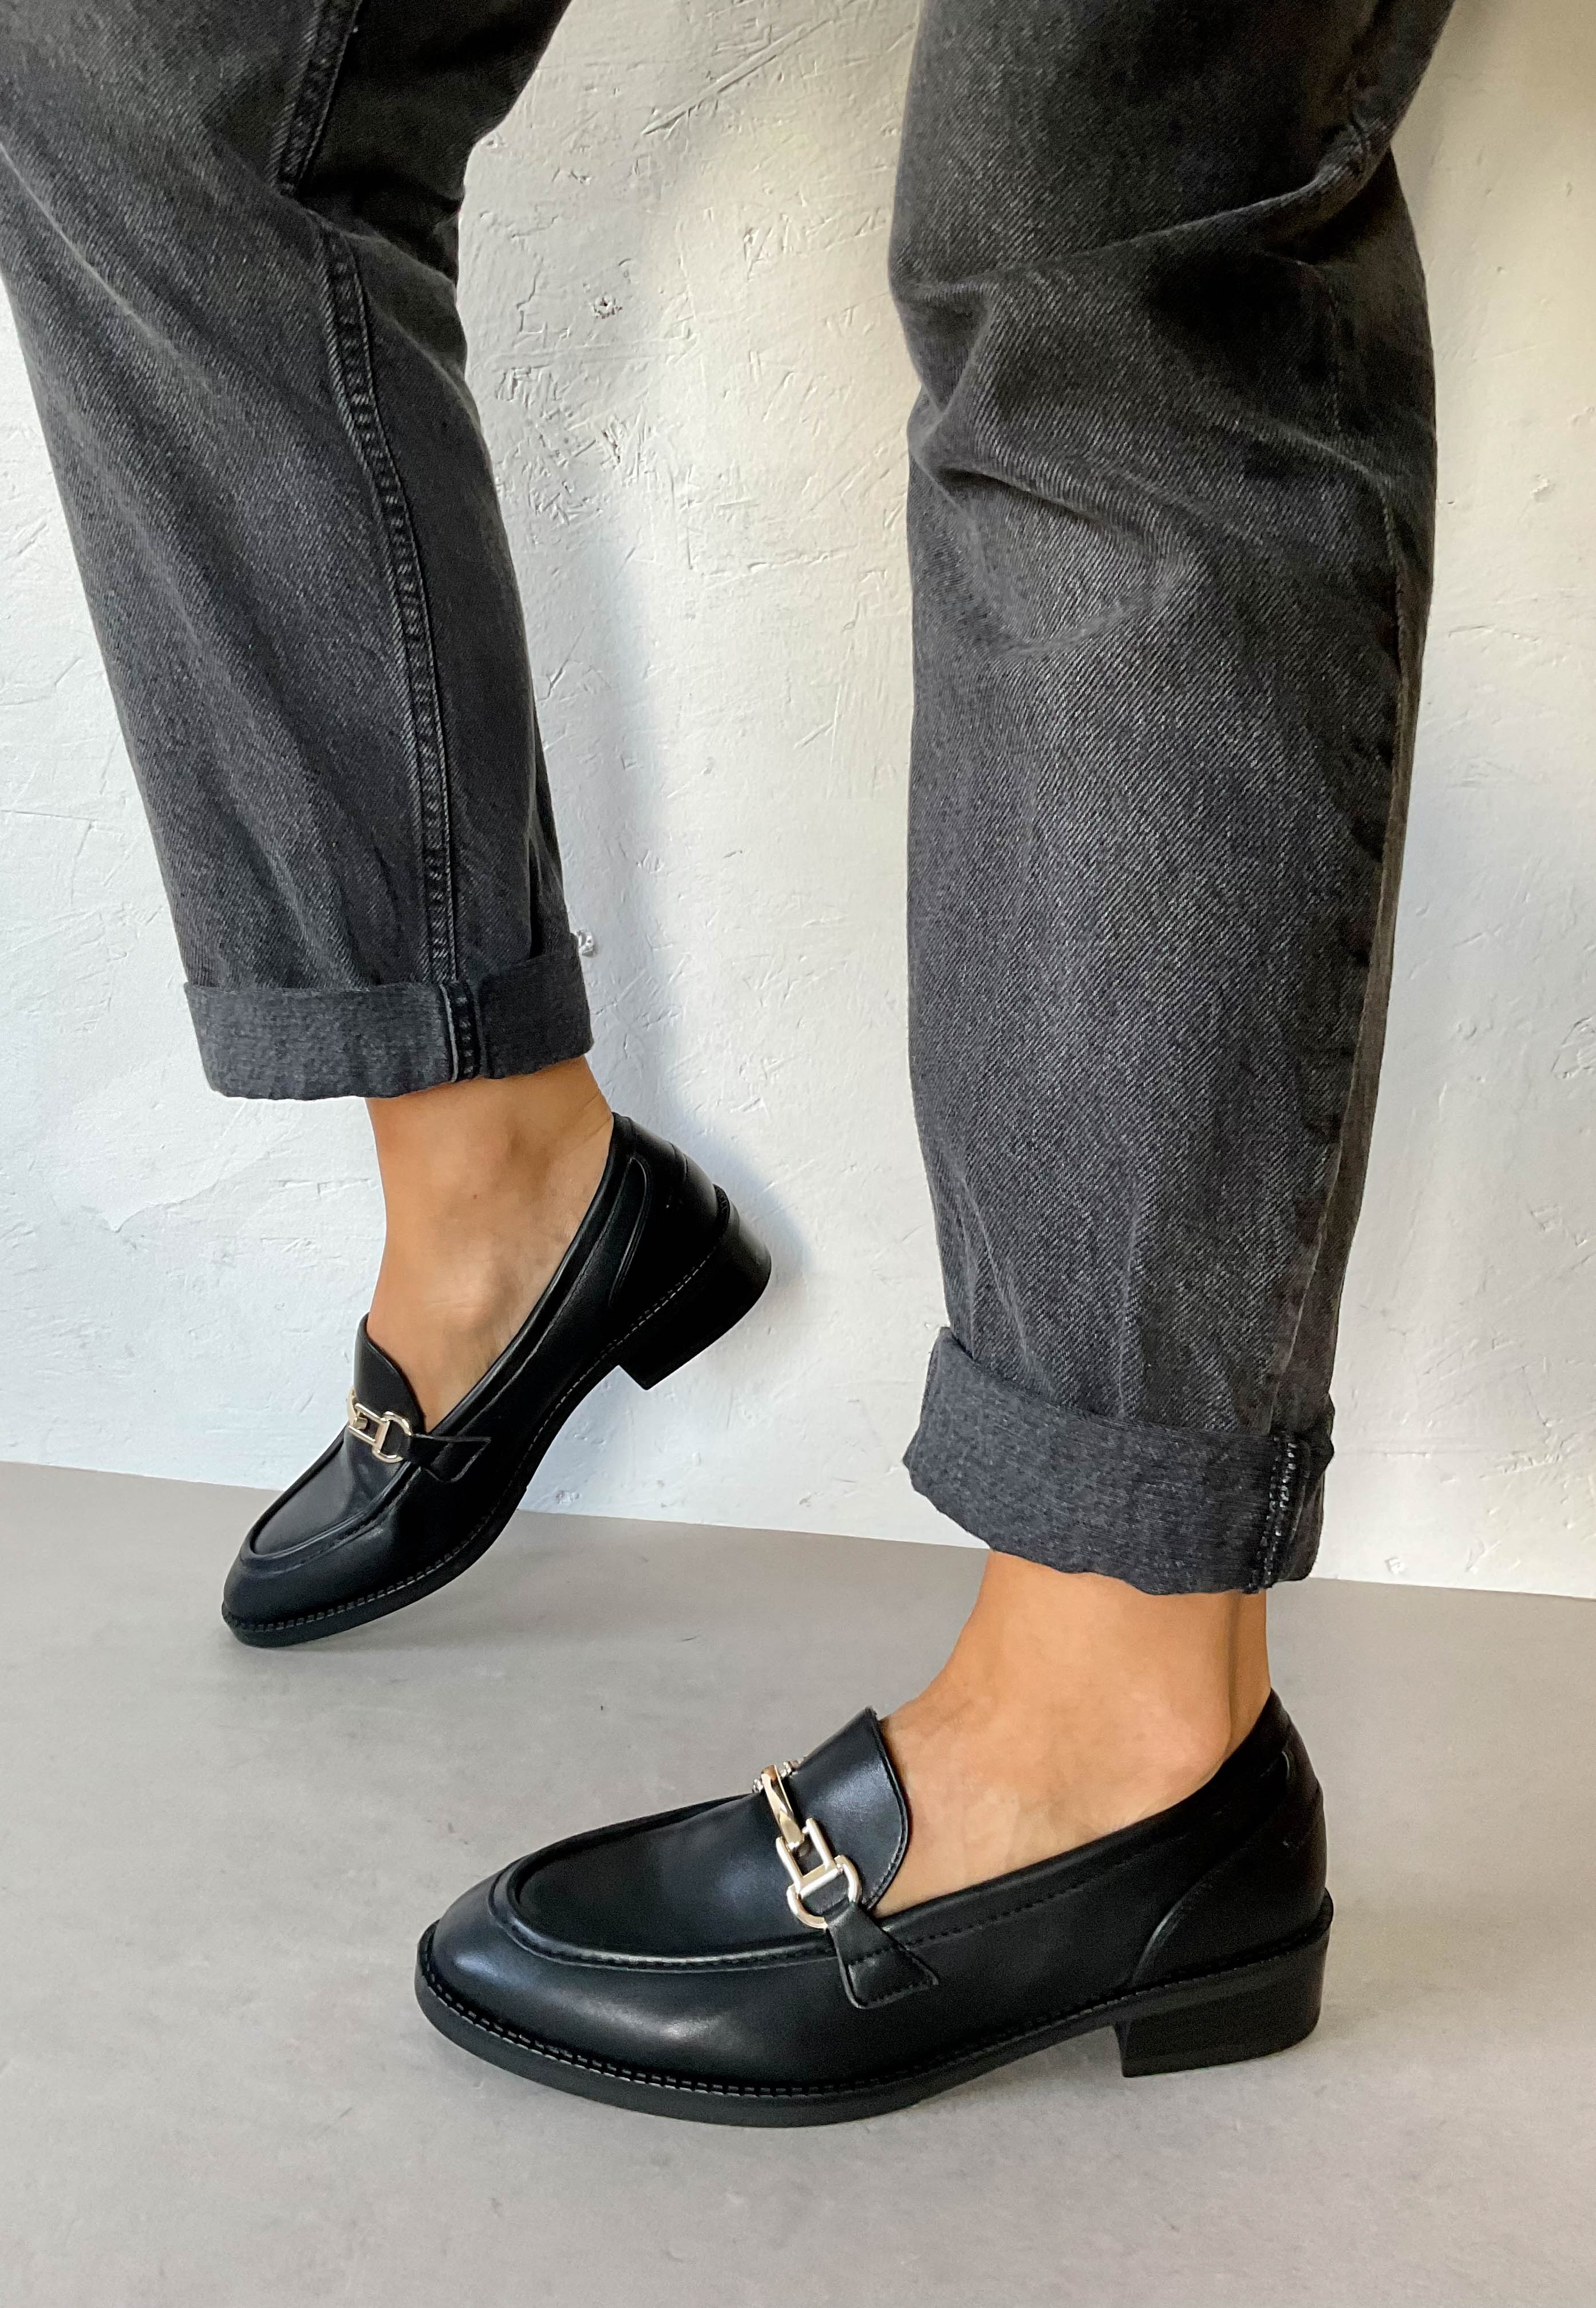 black loafer shoes for women